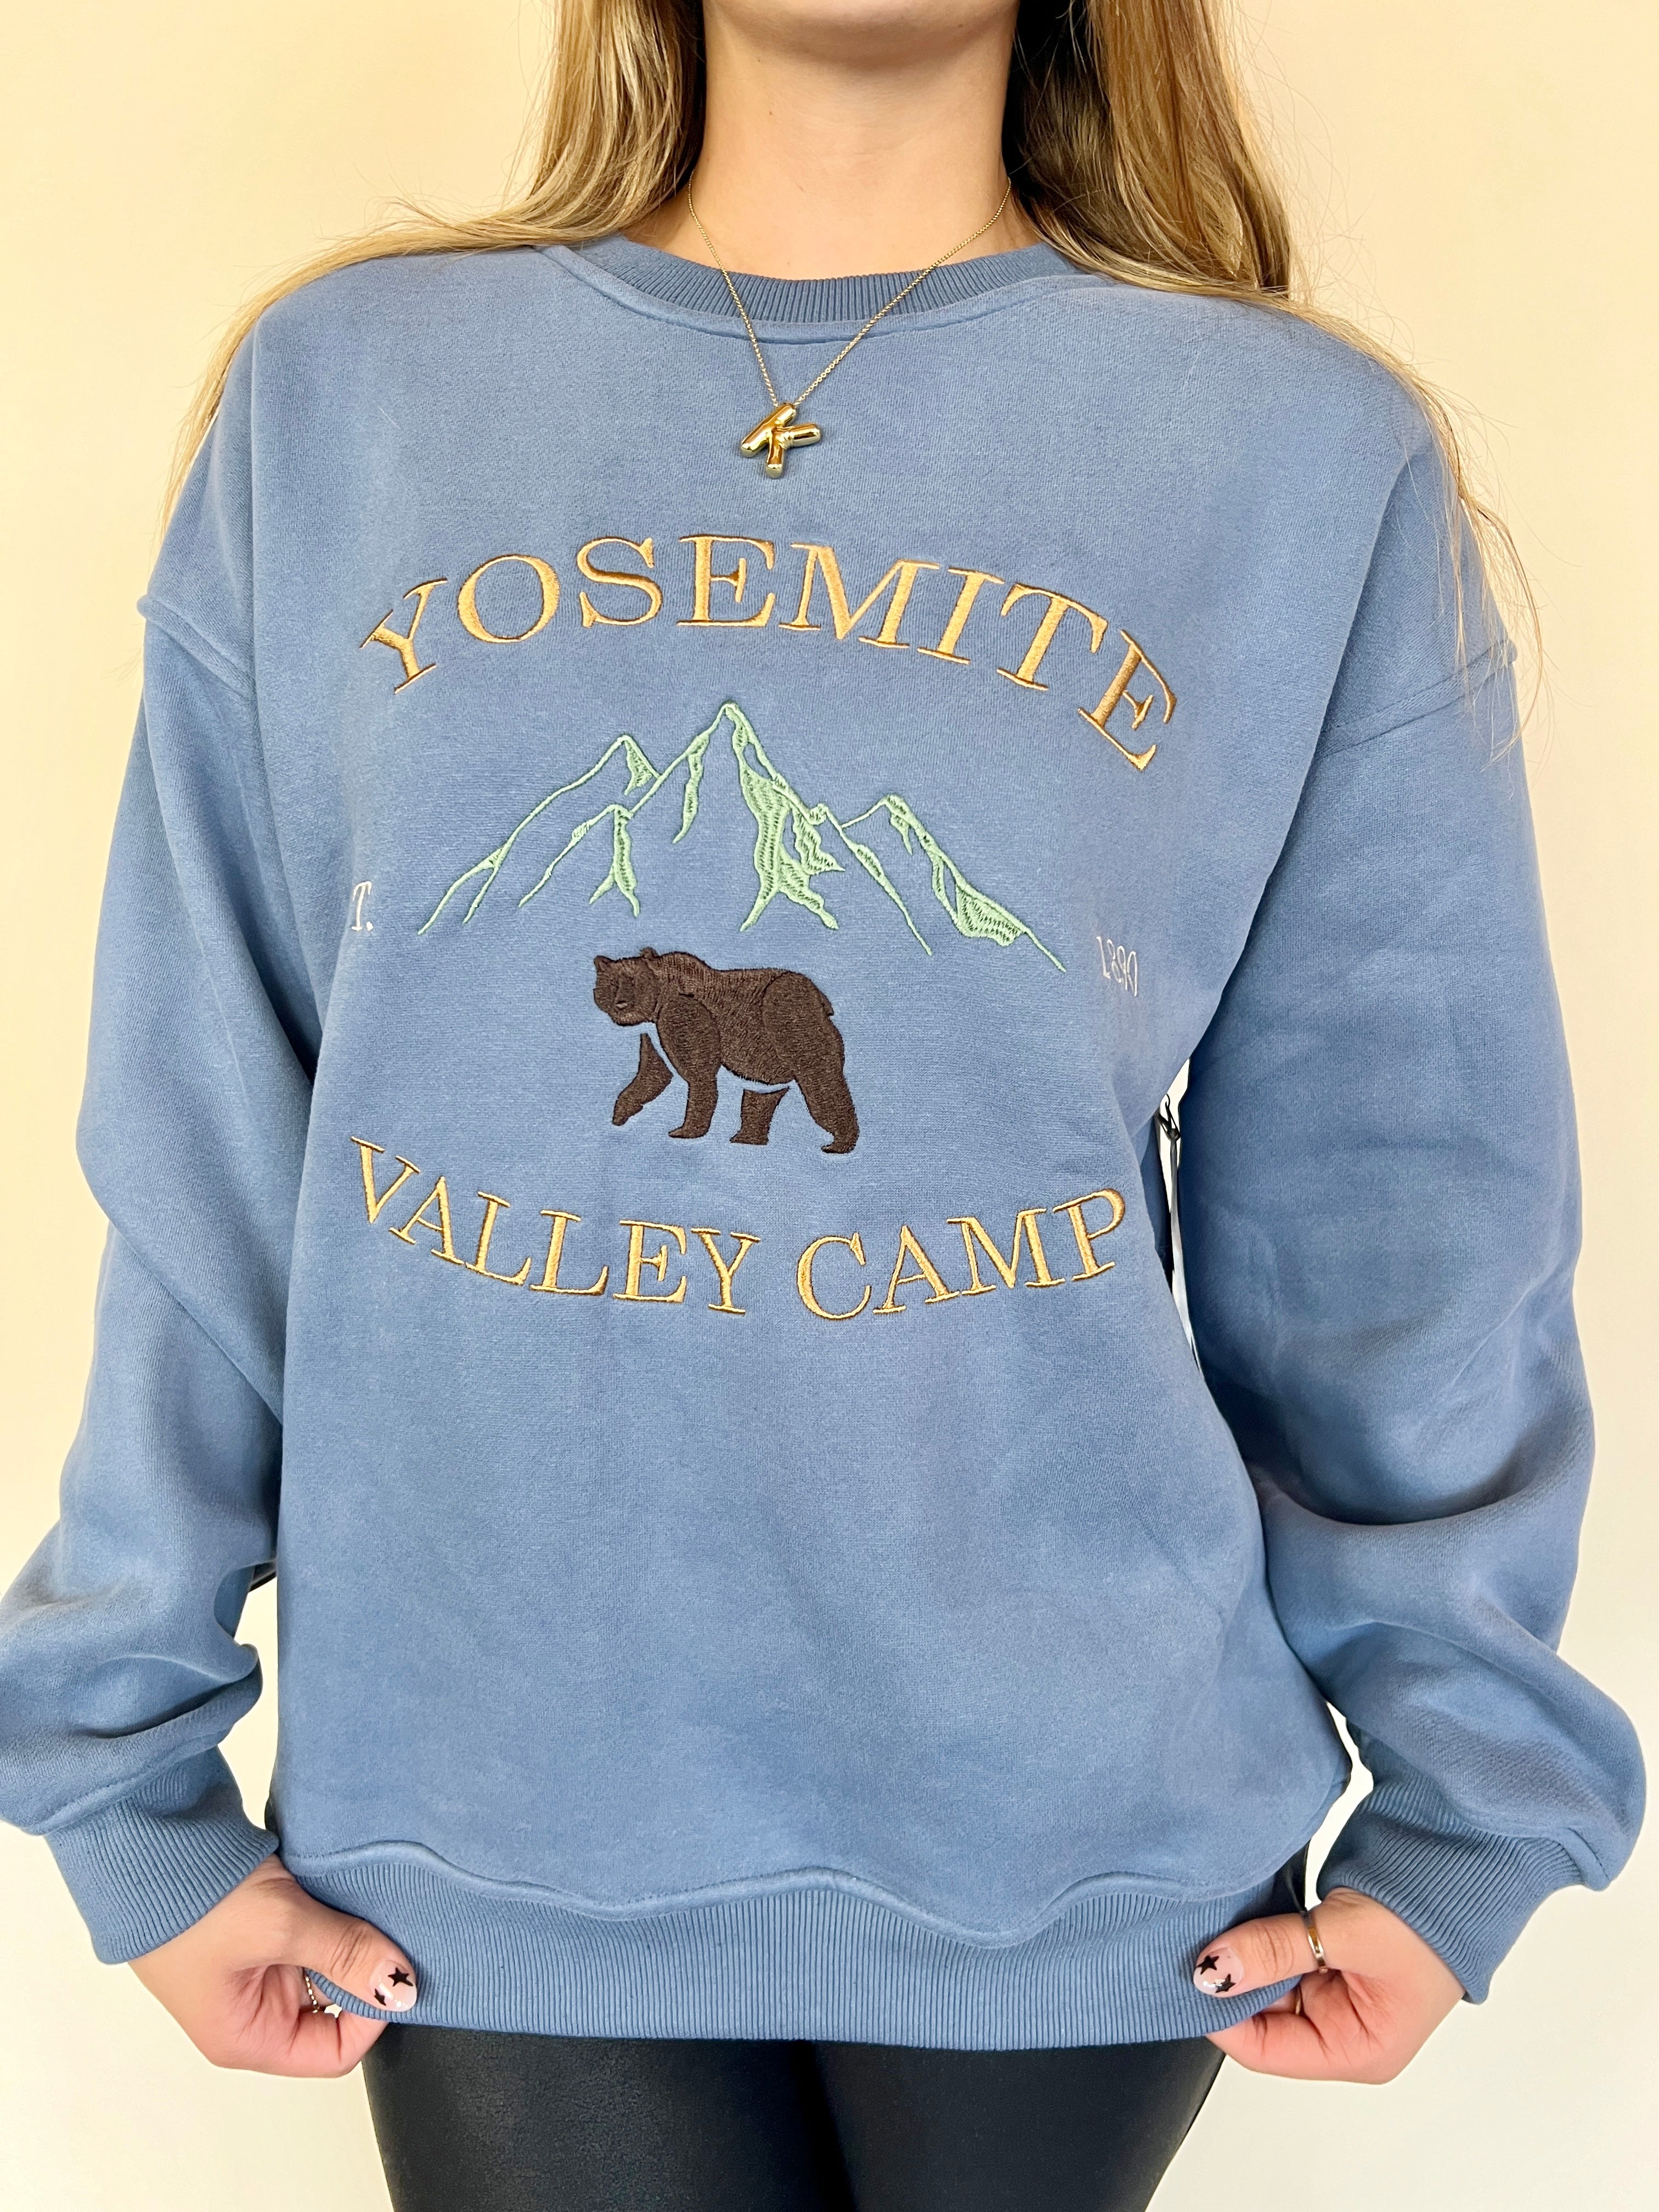 Yosemite Valley Camp Sweatshirt